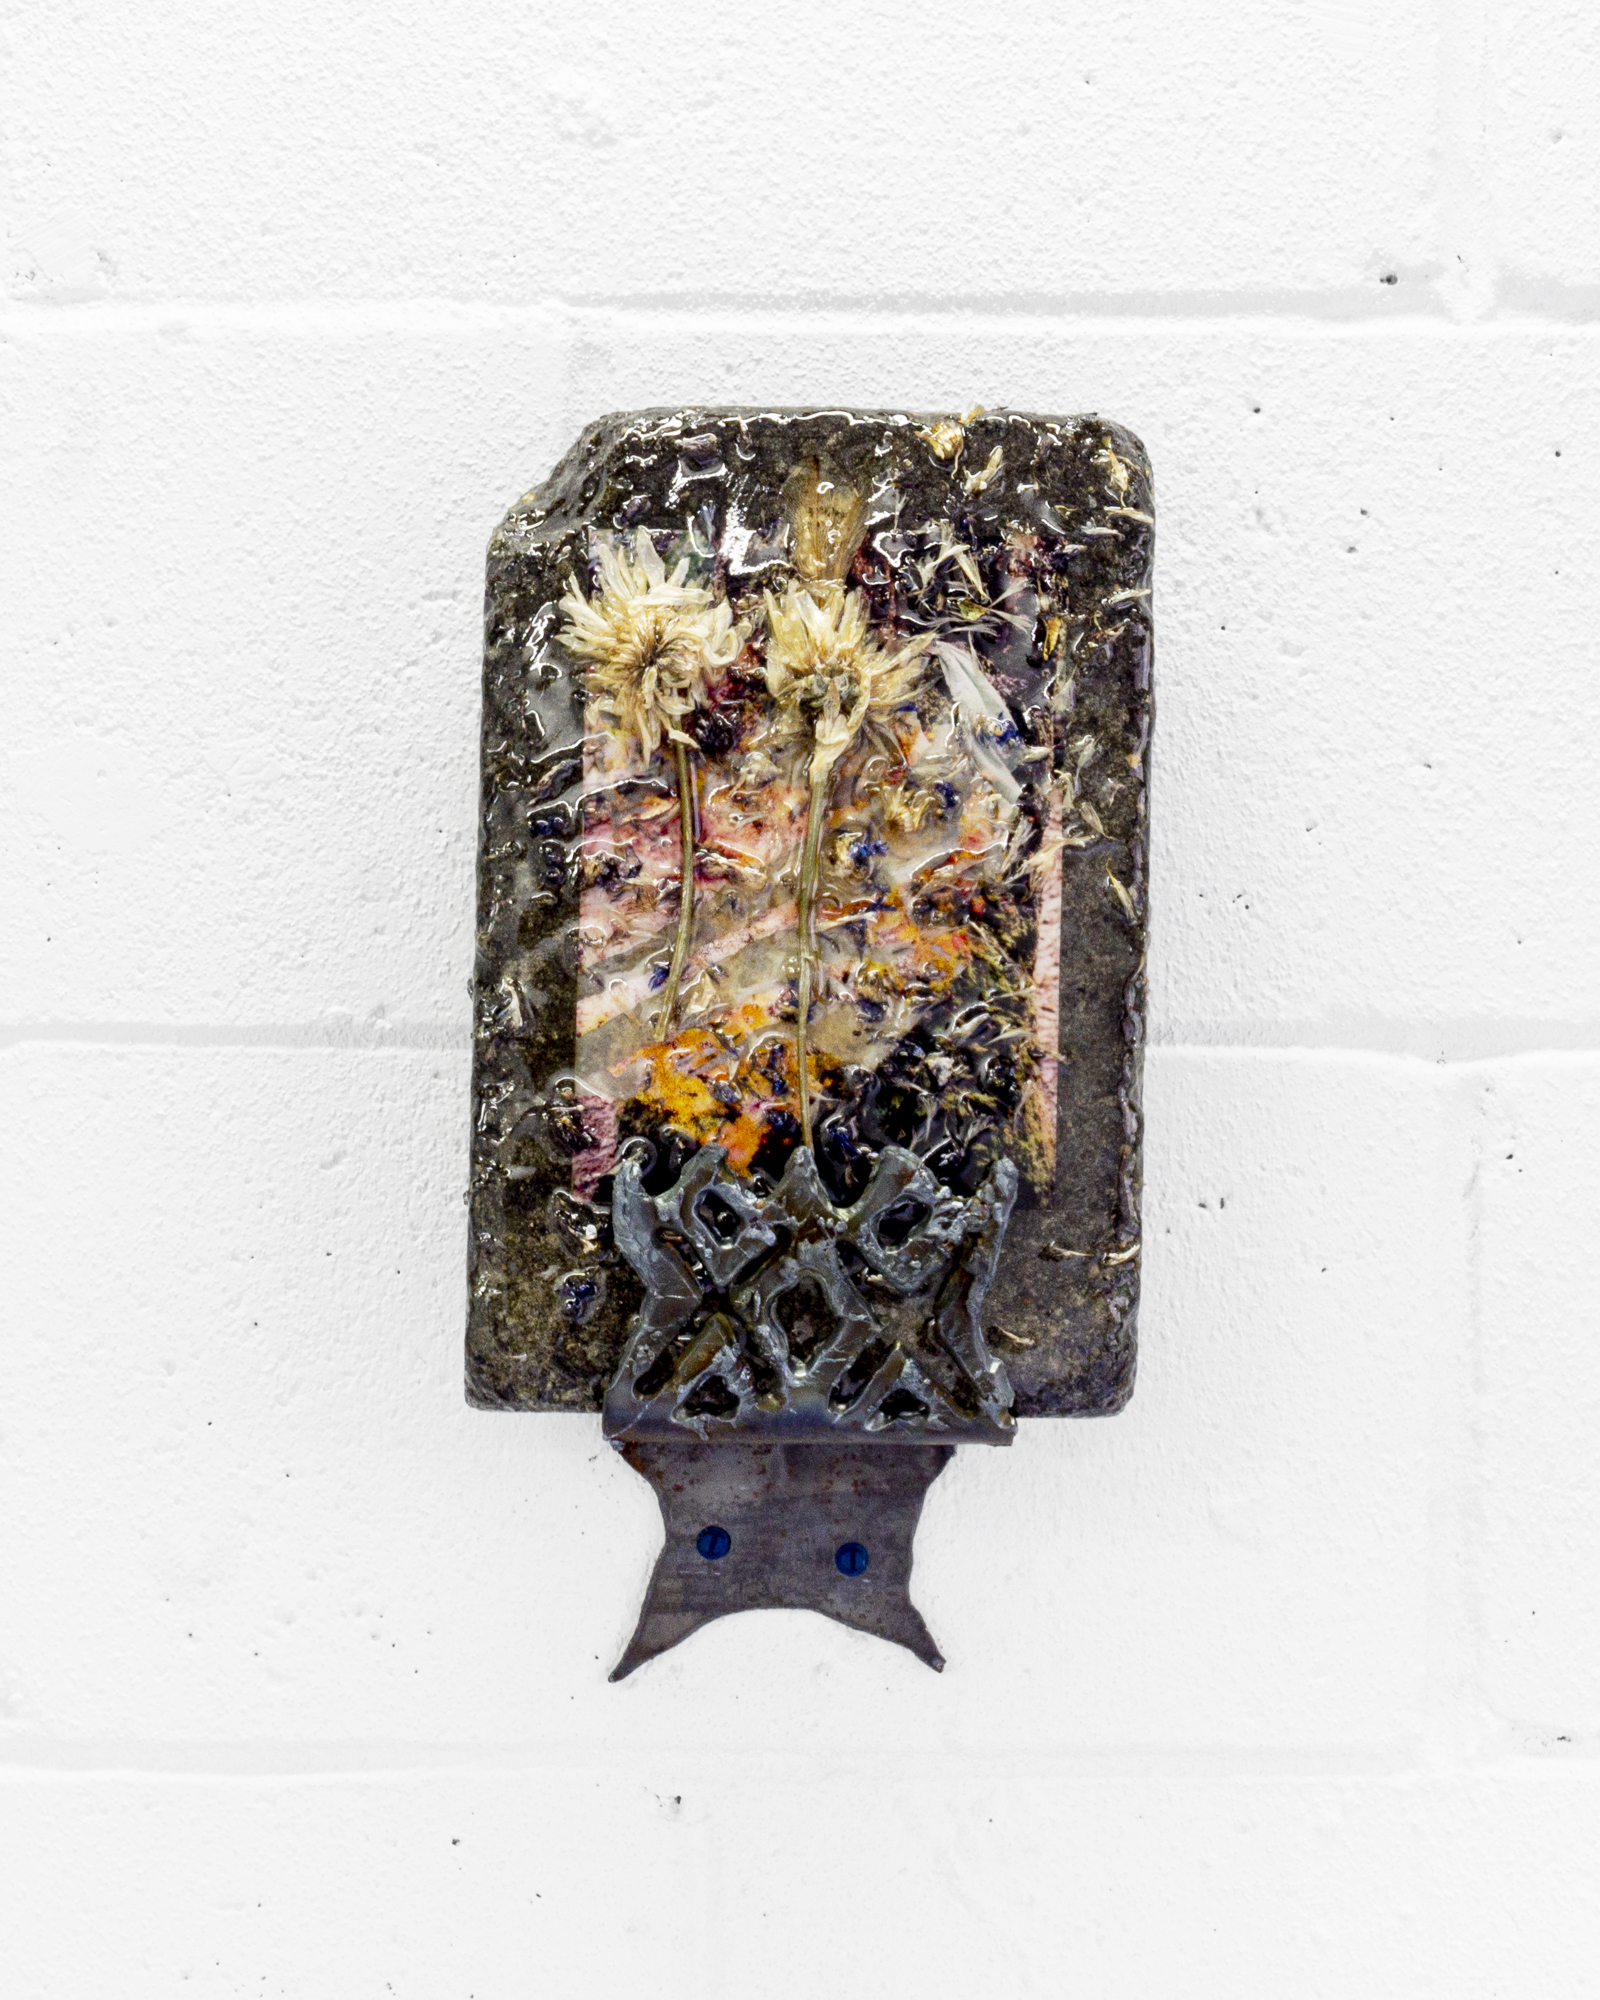  Suzanna Zak, “Moss Soak,” 2019, Weathered C-print, stone, flowers, resin, steel. 